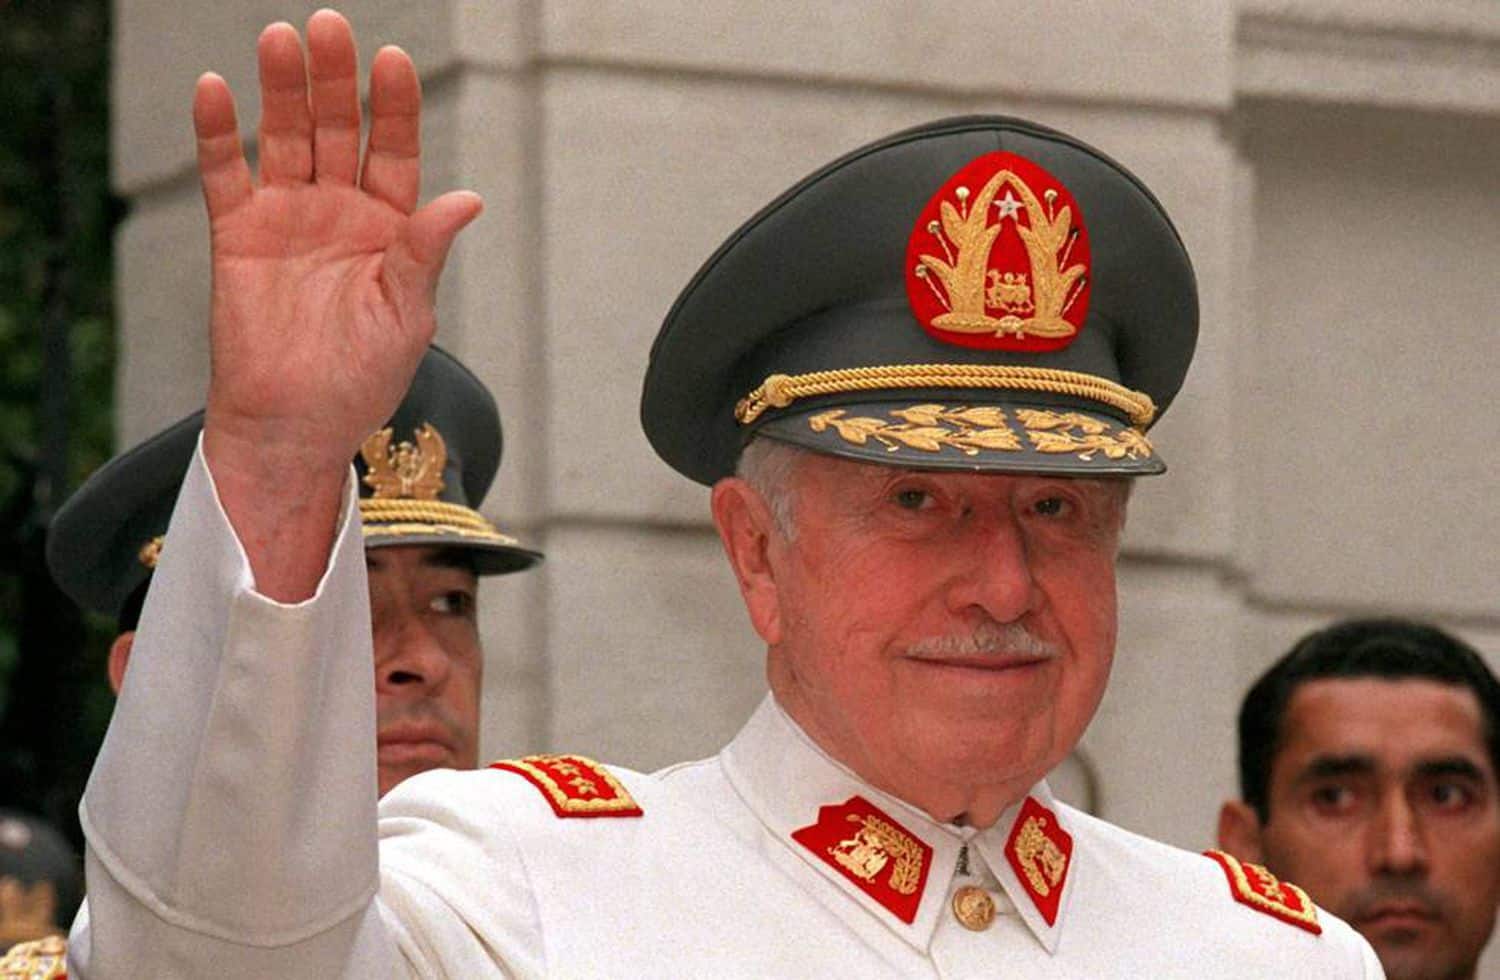 Augusto Pinochet, quem foi? Vida, golpe contra Allende e ditadura chilena